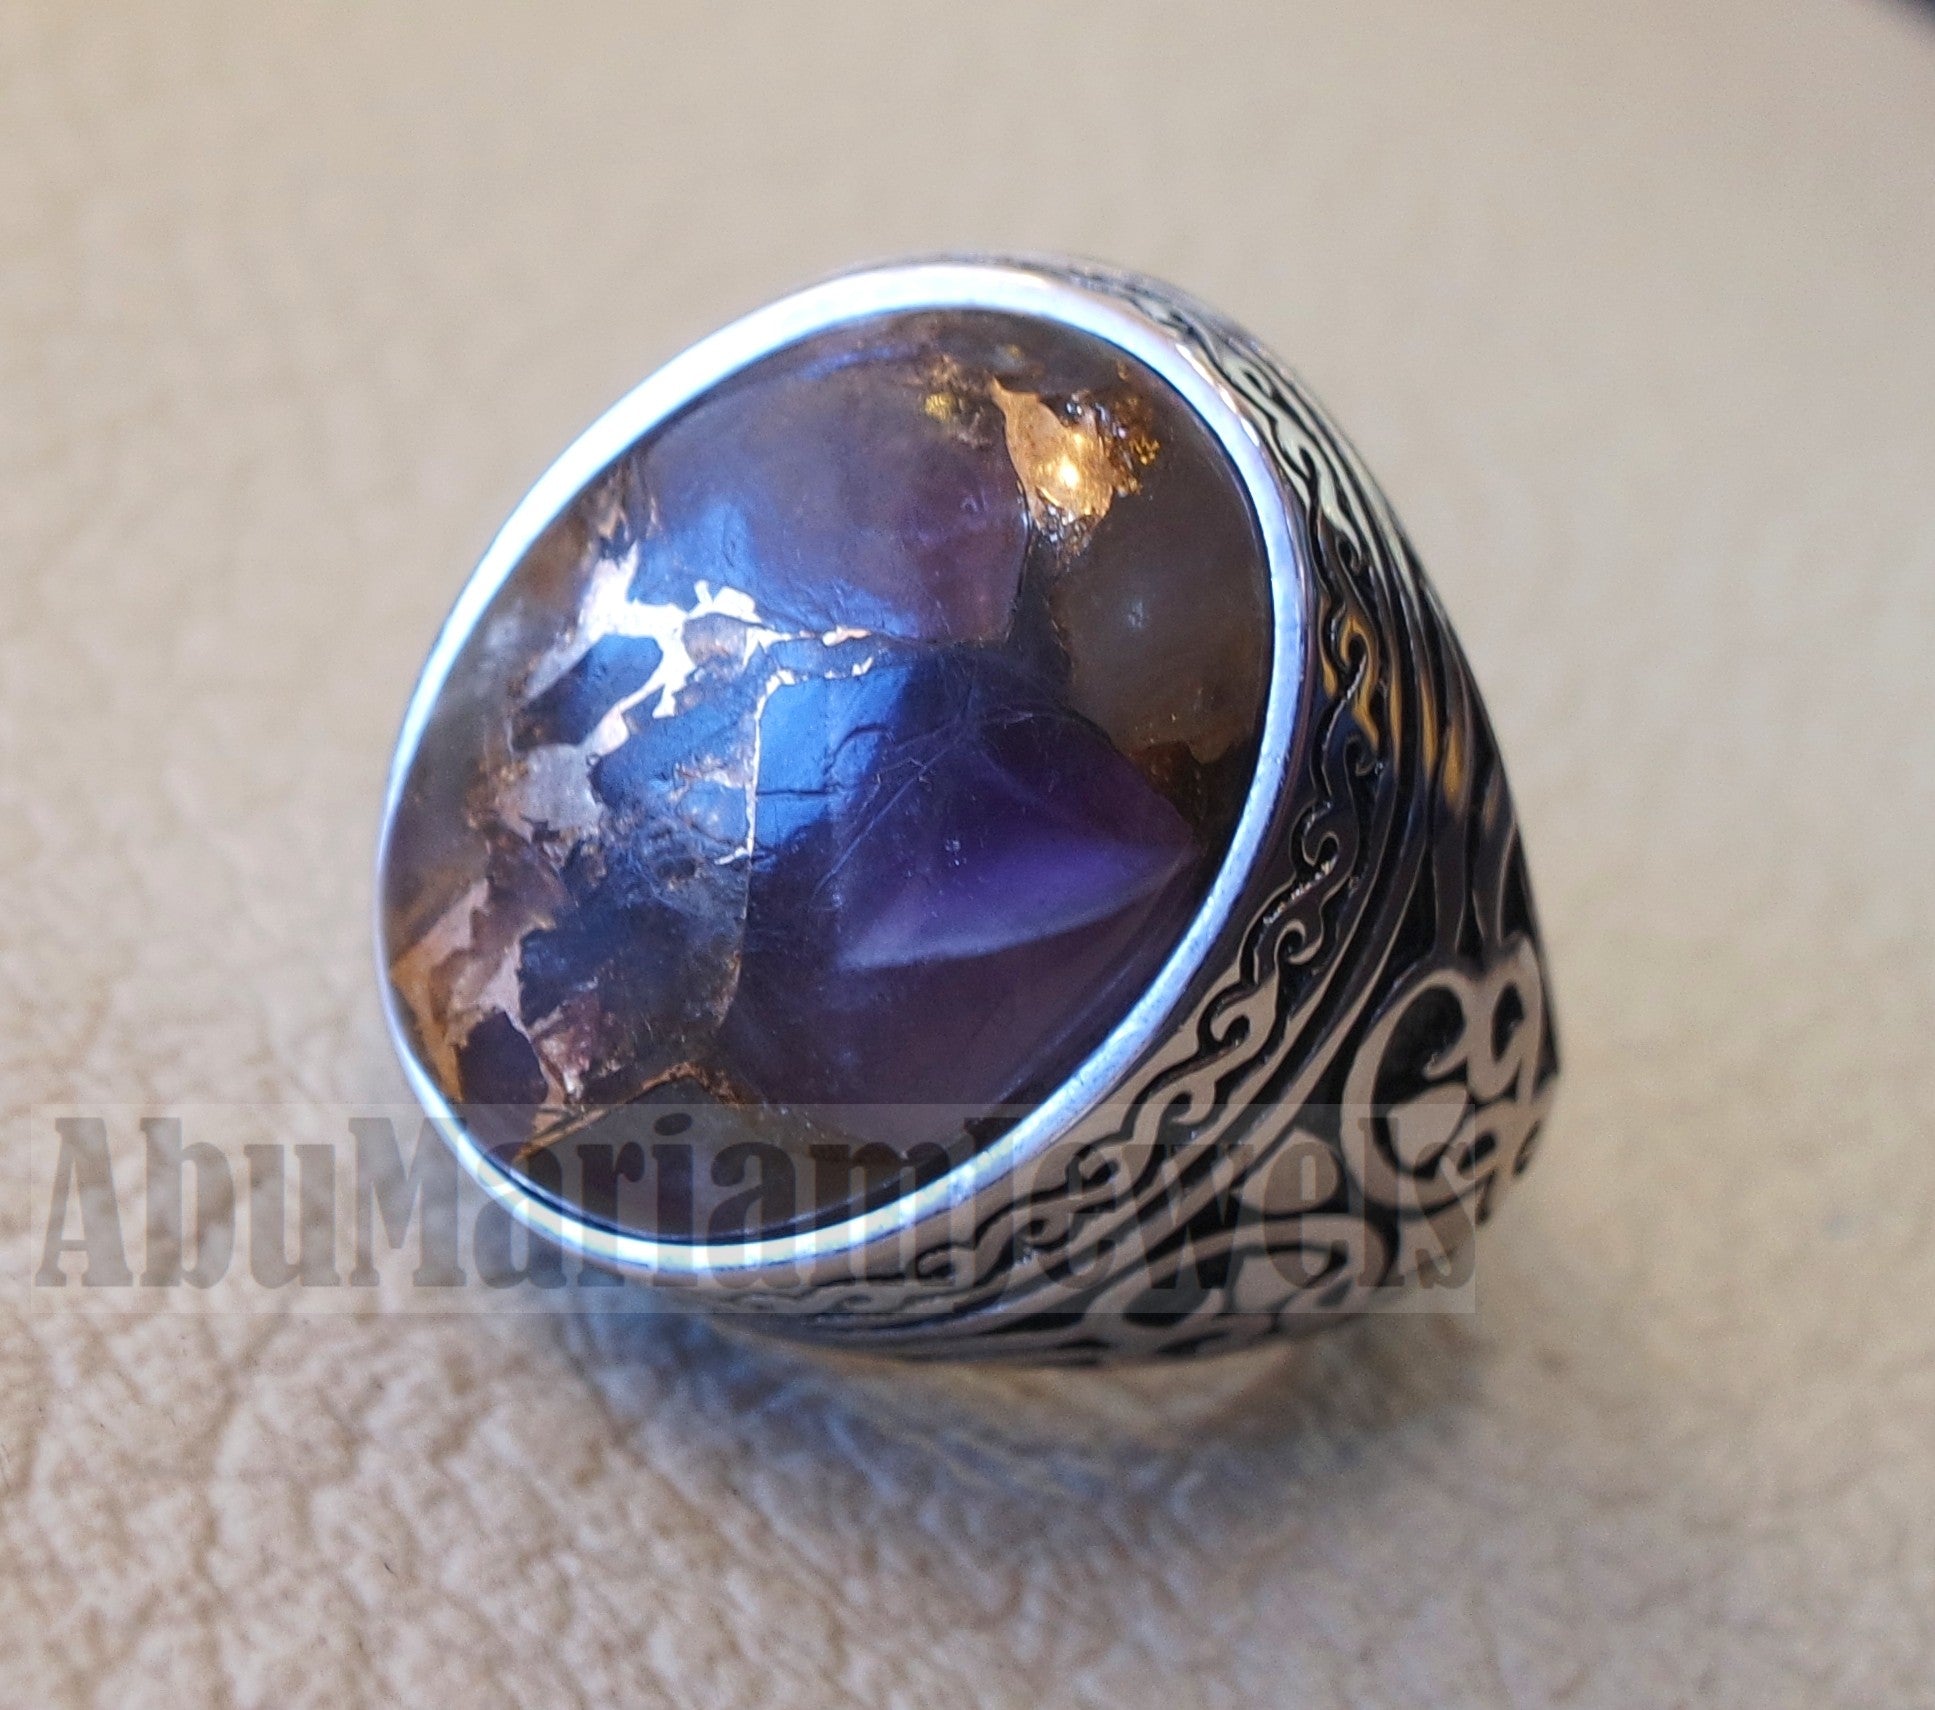 copper amethyst man ring natural purple stone sterling silver 925 oval cabochon semi precious gem ottoman arabic style all sizes jewelry